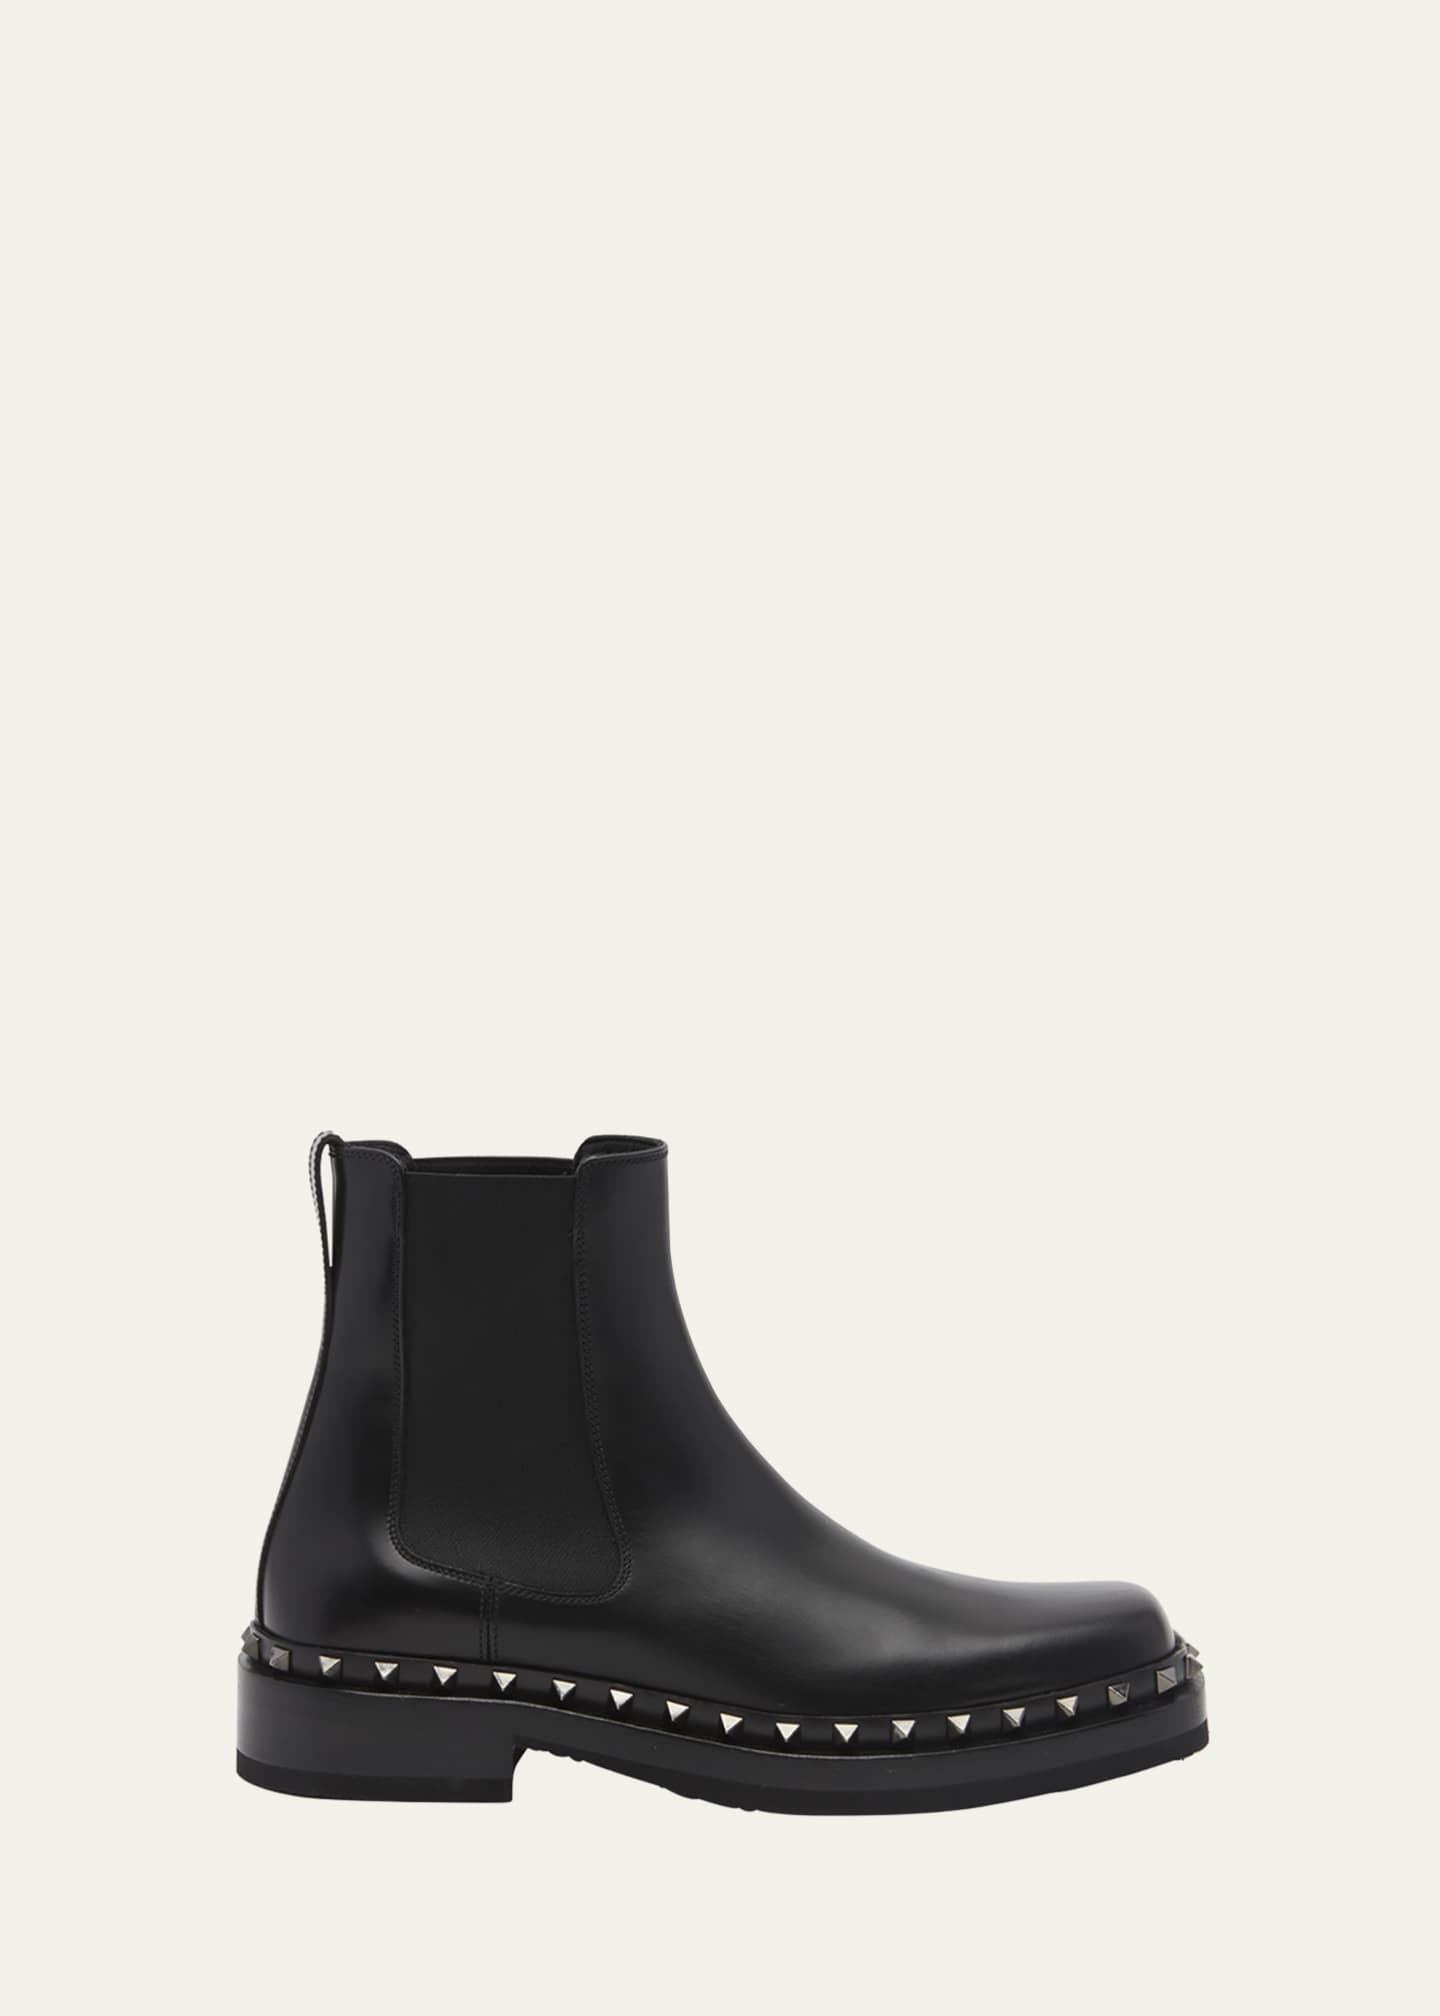 Valentino Garavani Men's Rockstud Beatle Leather Chelsea Boots